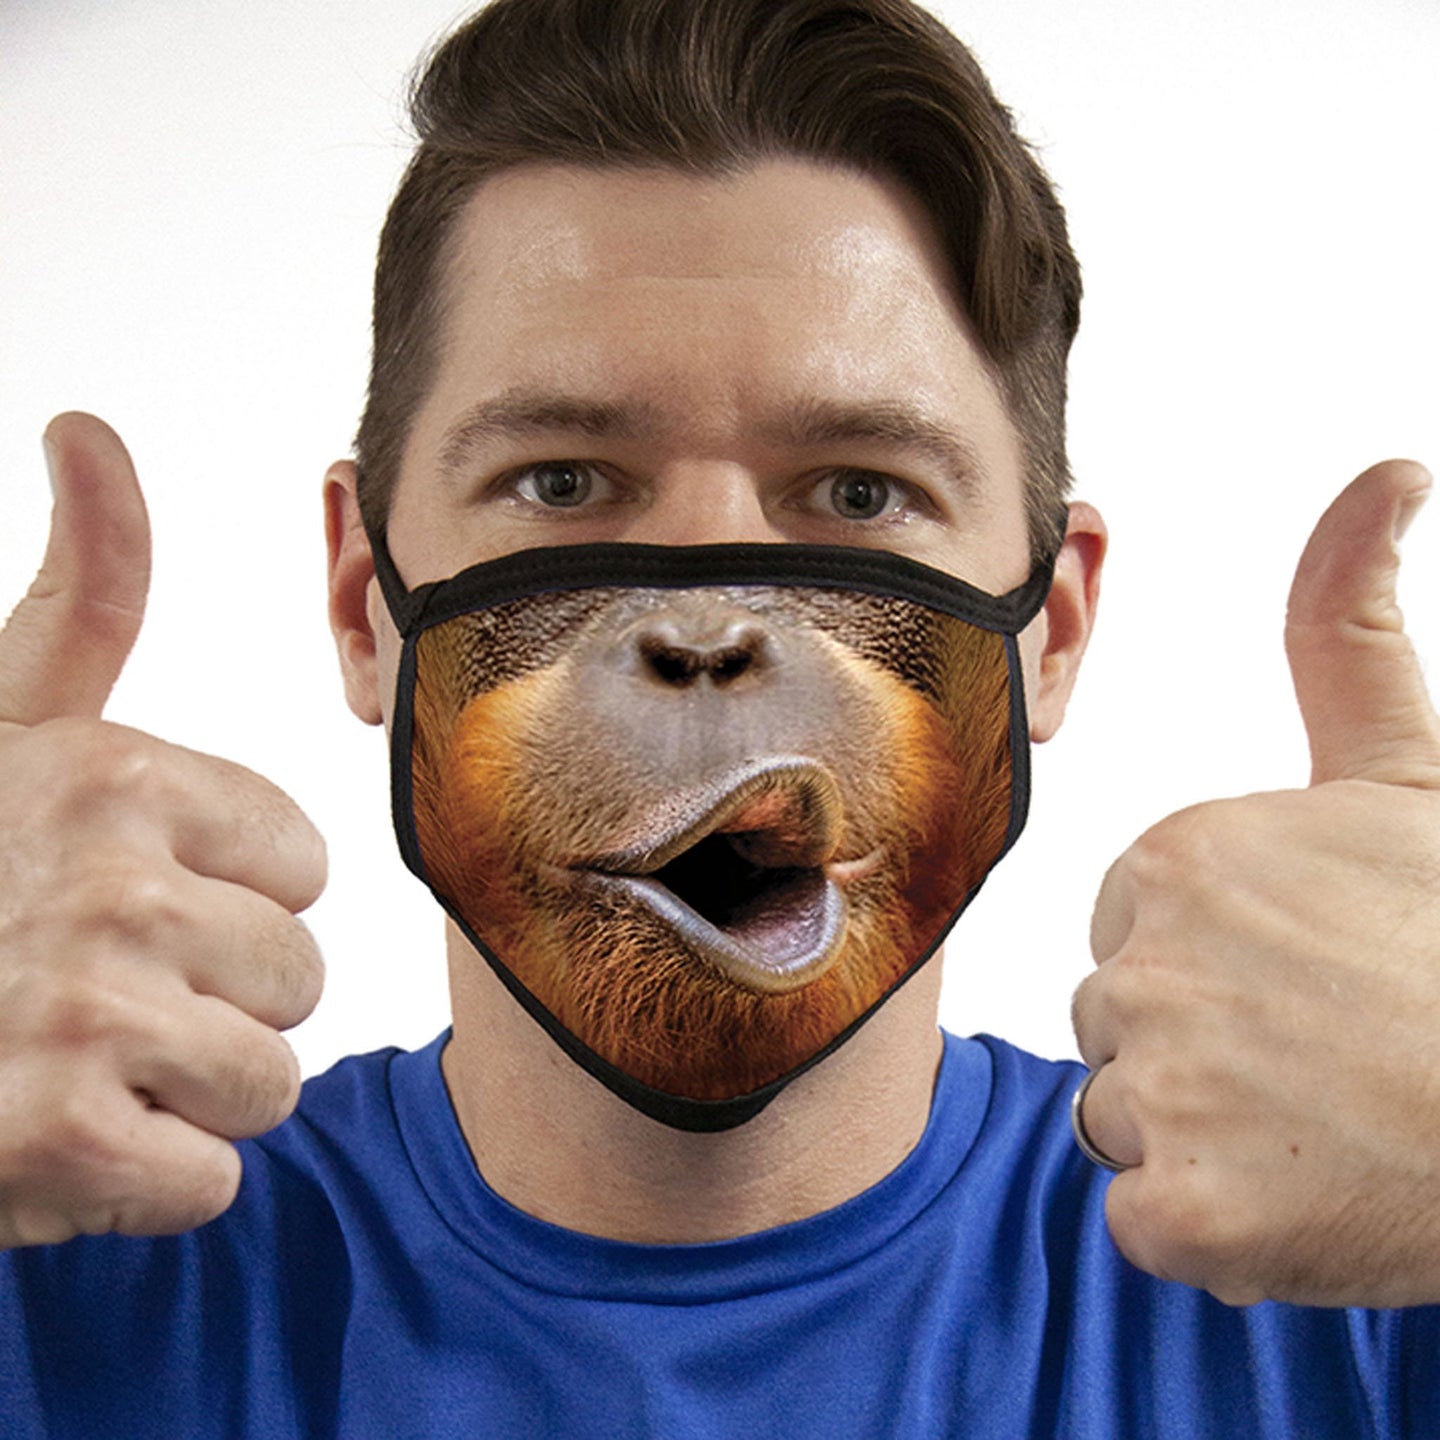 Orangutan FACE MASK Cover Your Face Masks